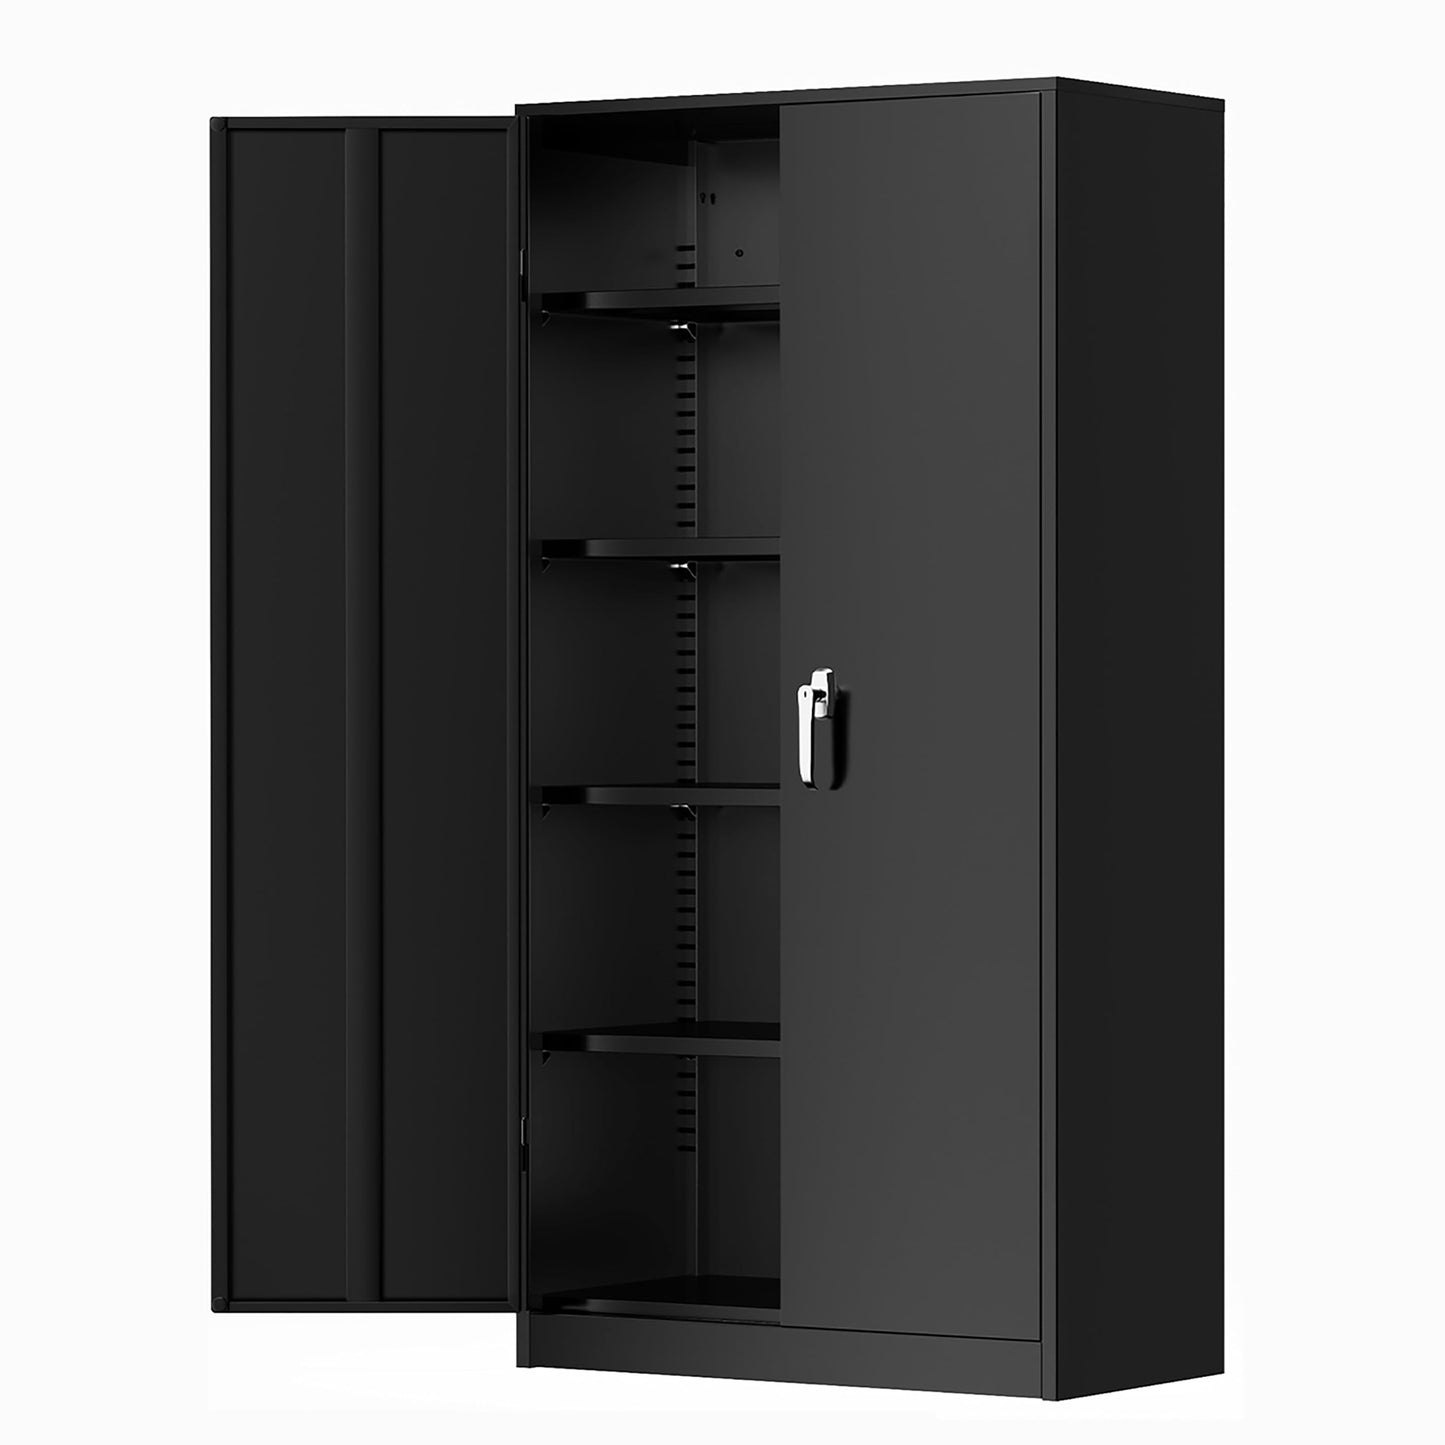 Greenvelly Metal Storage Cabinets 72” Black Garage Steel Storage Cabinet with Doors and Shelves, Metal Tool Cabinet, Steel File Cabinet for Home